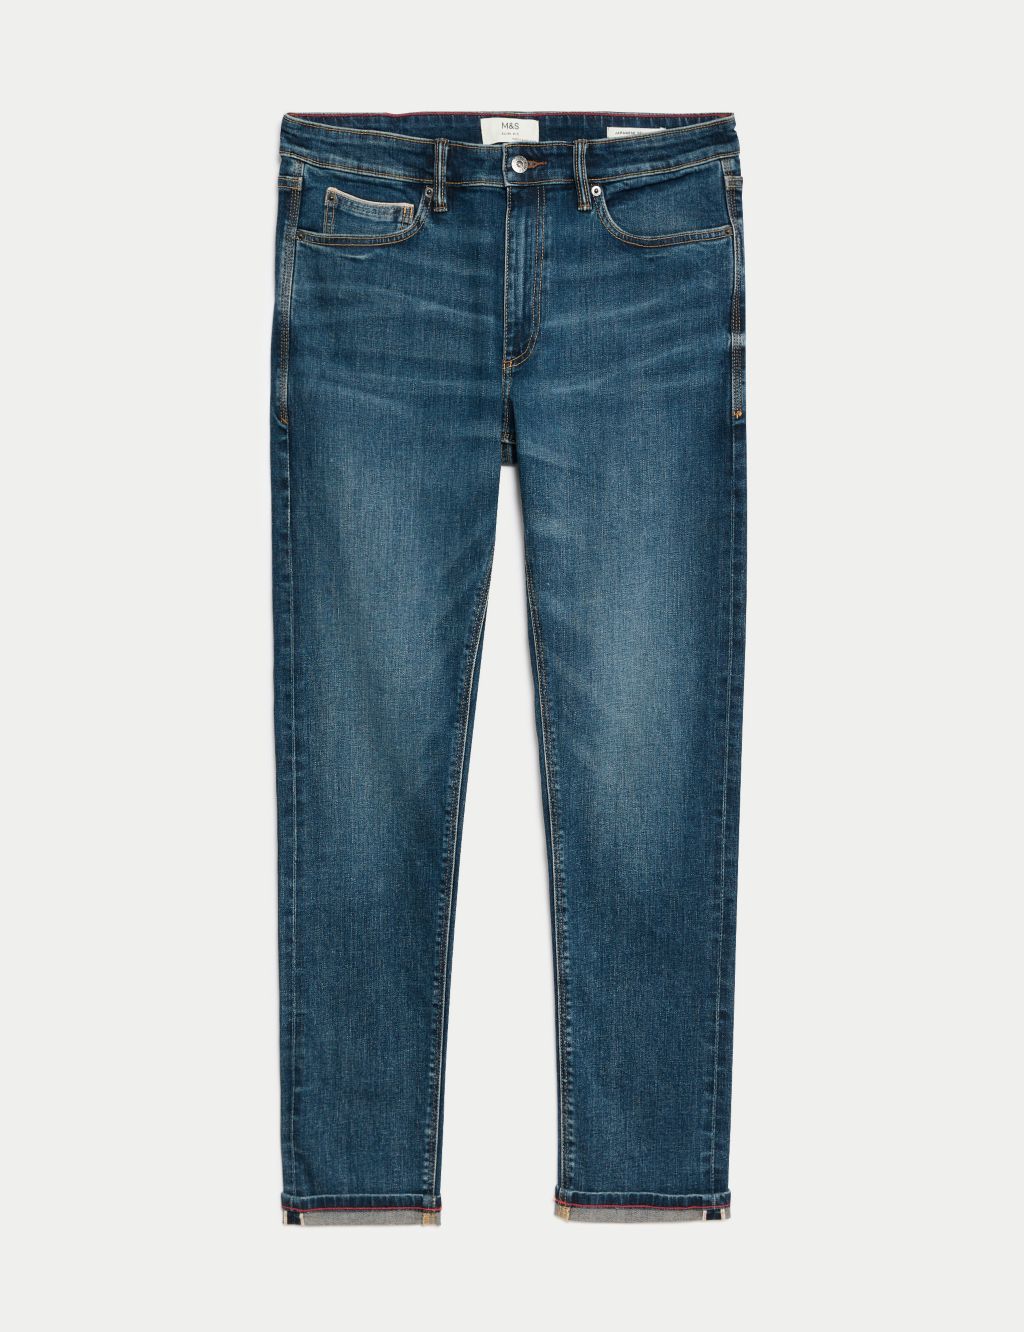 Slim Fit Japanese Selvedge Stretch Jeans image 2